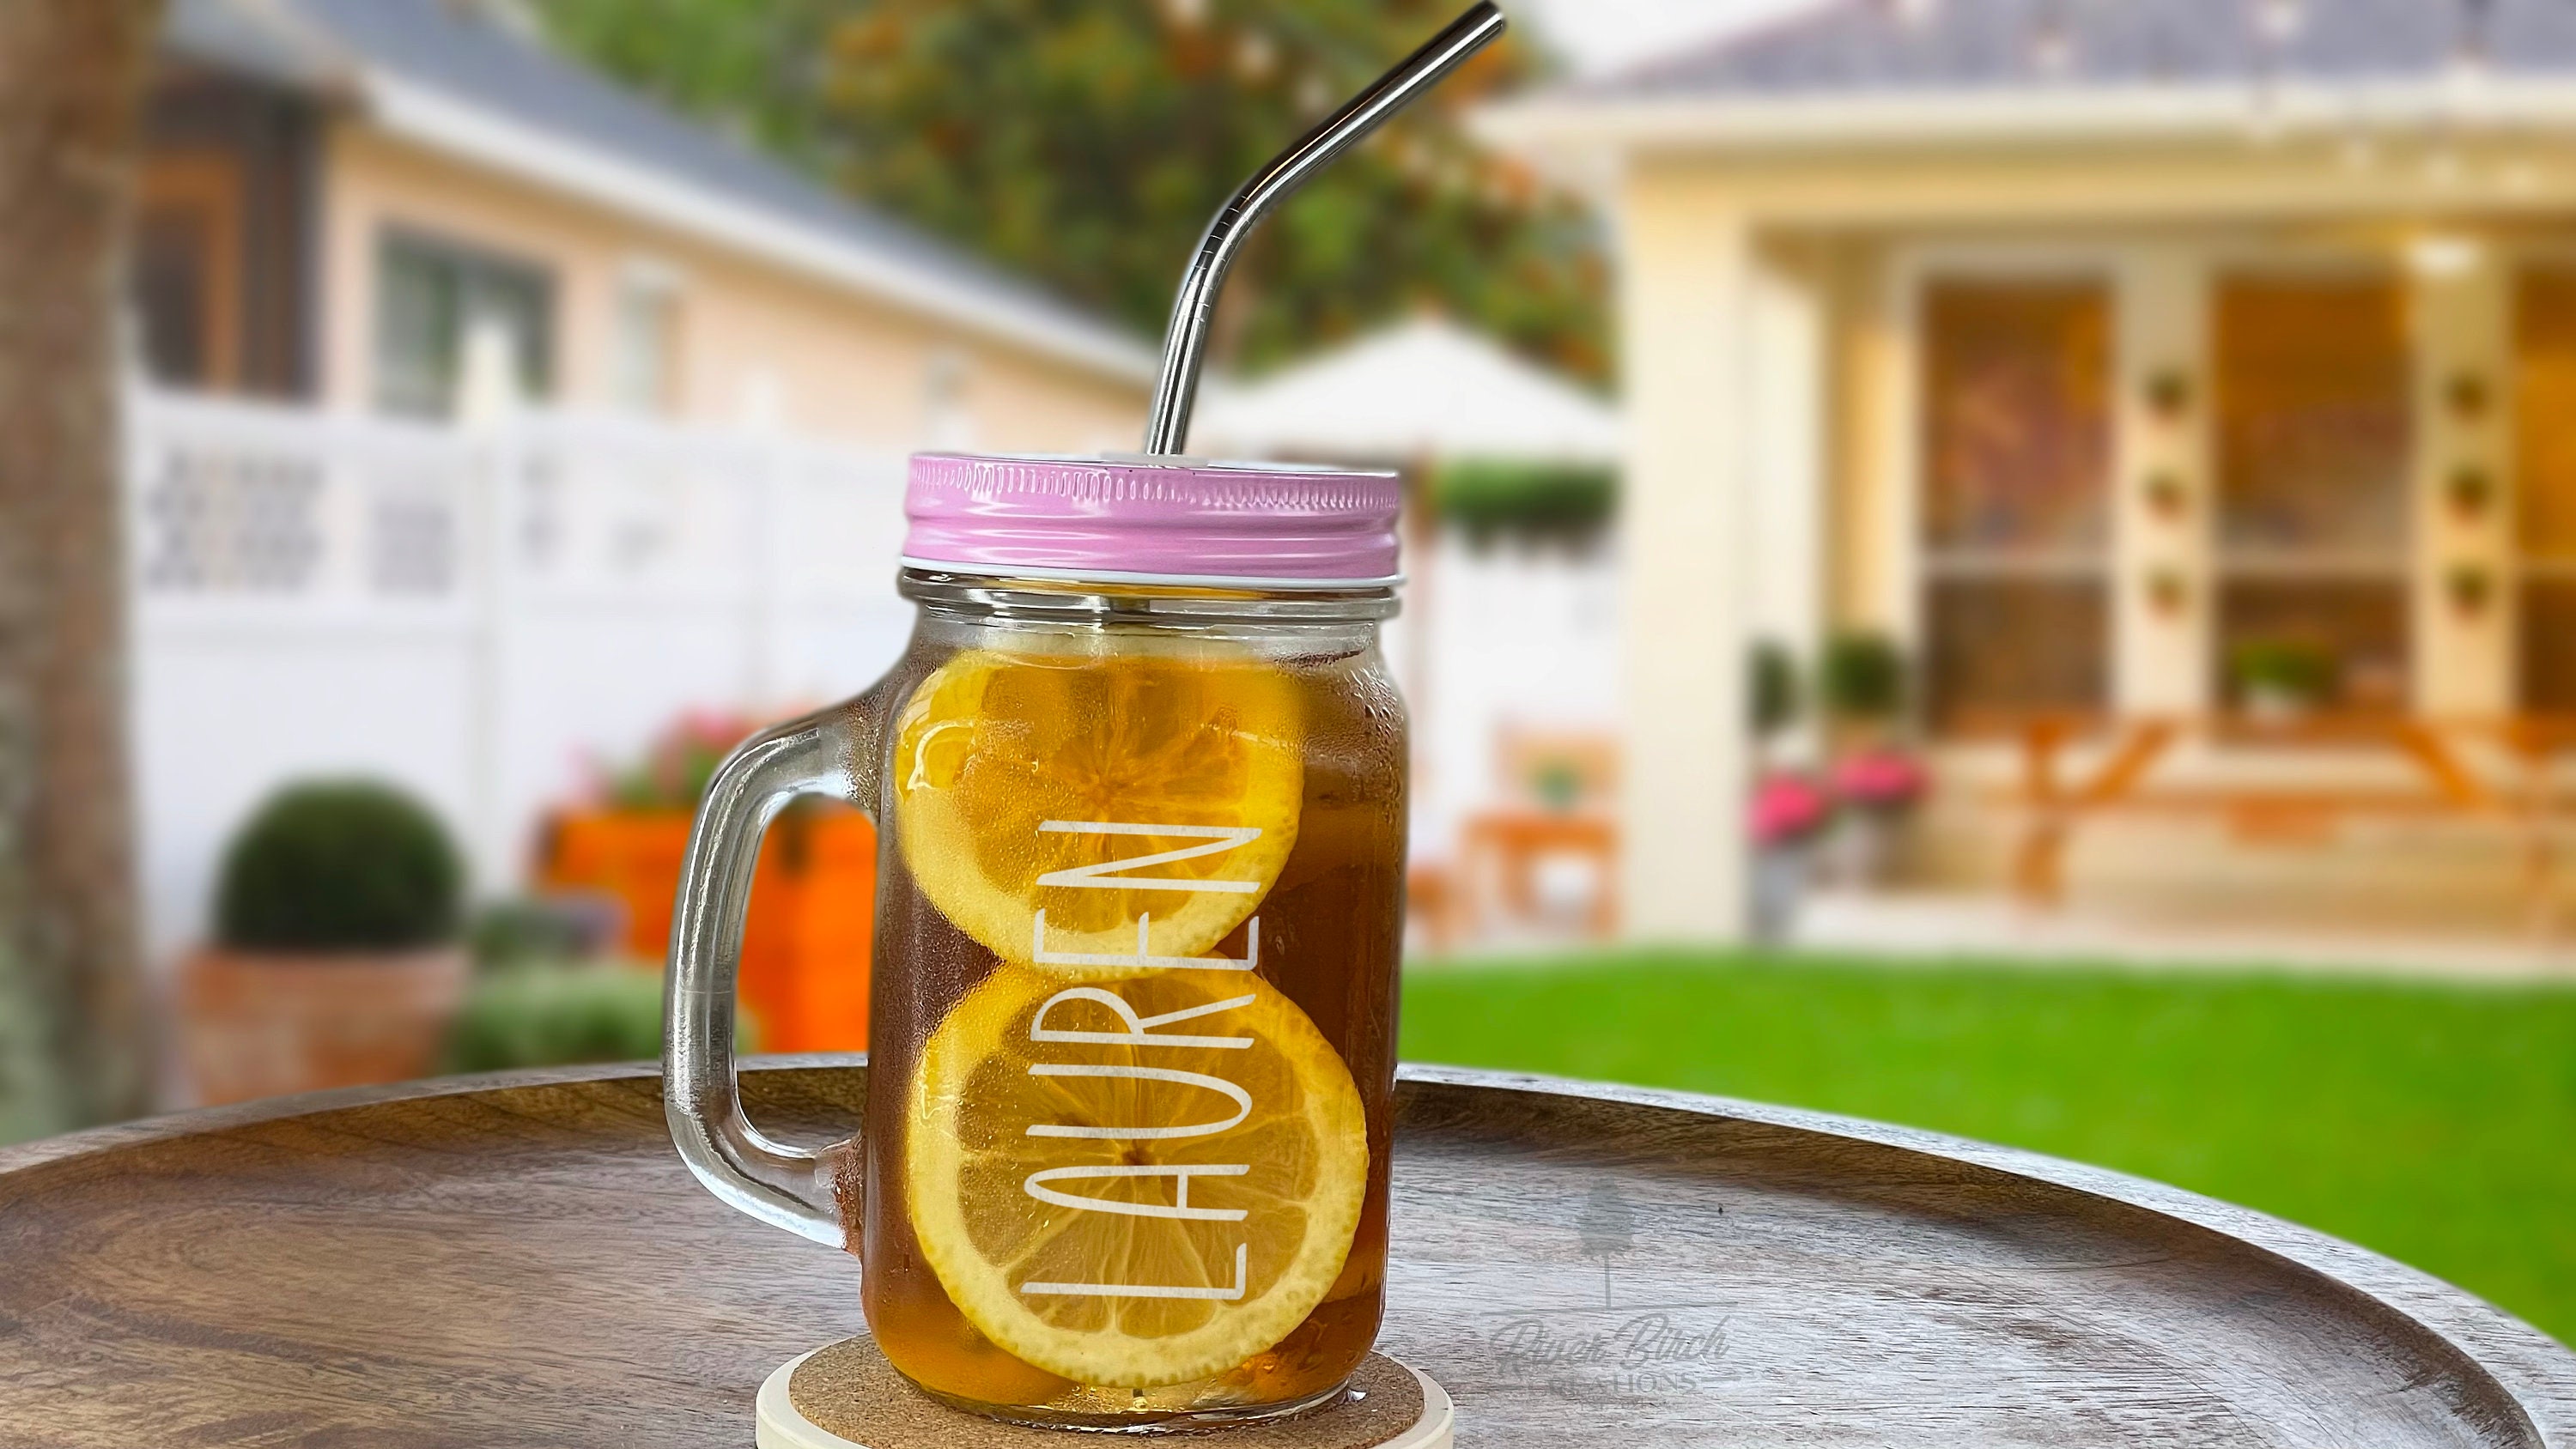 Personalized Mason Jar Drinking Glasses – A Gift Personalized